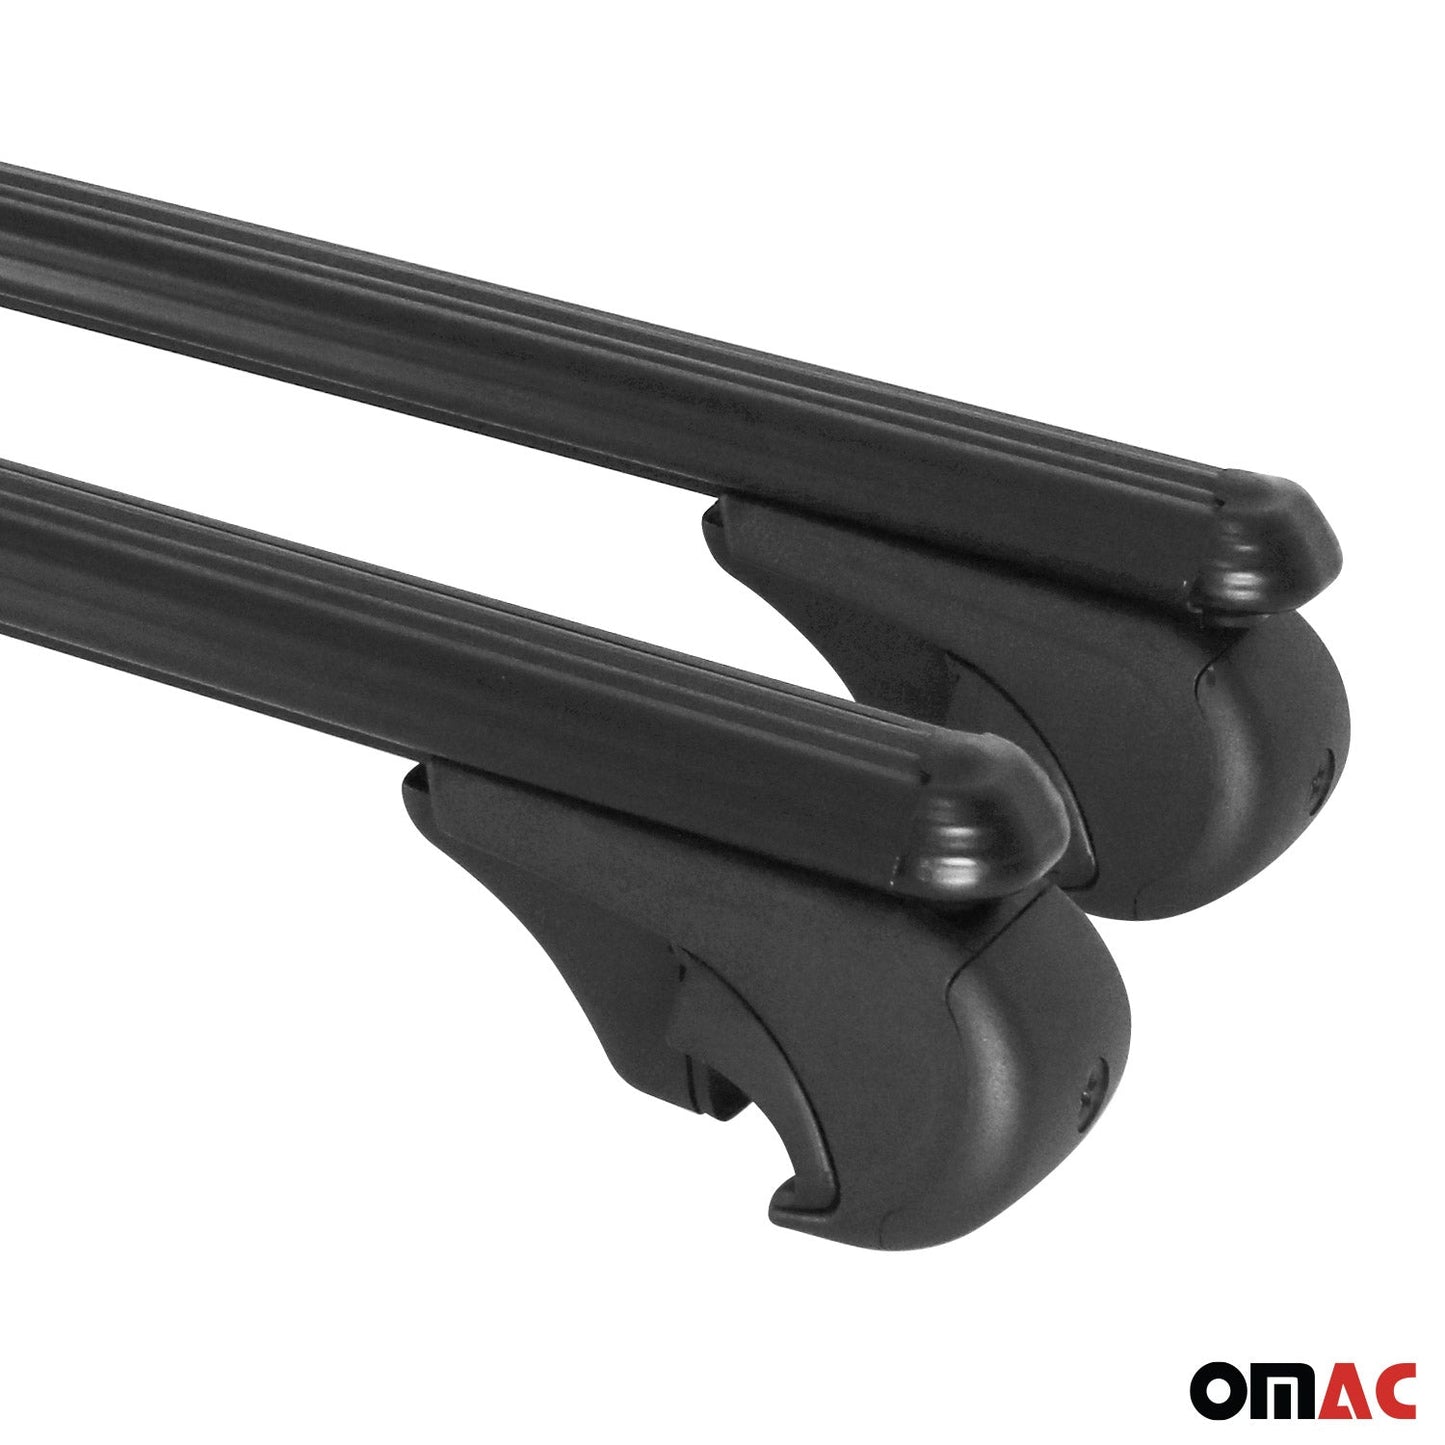 OMAC Bike Rack Carrier Roof Racks Set for Mitsubishi Outlander 2007-2013 Black 3x U020701